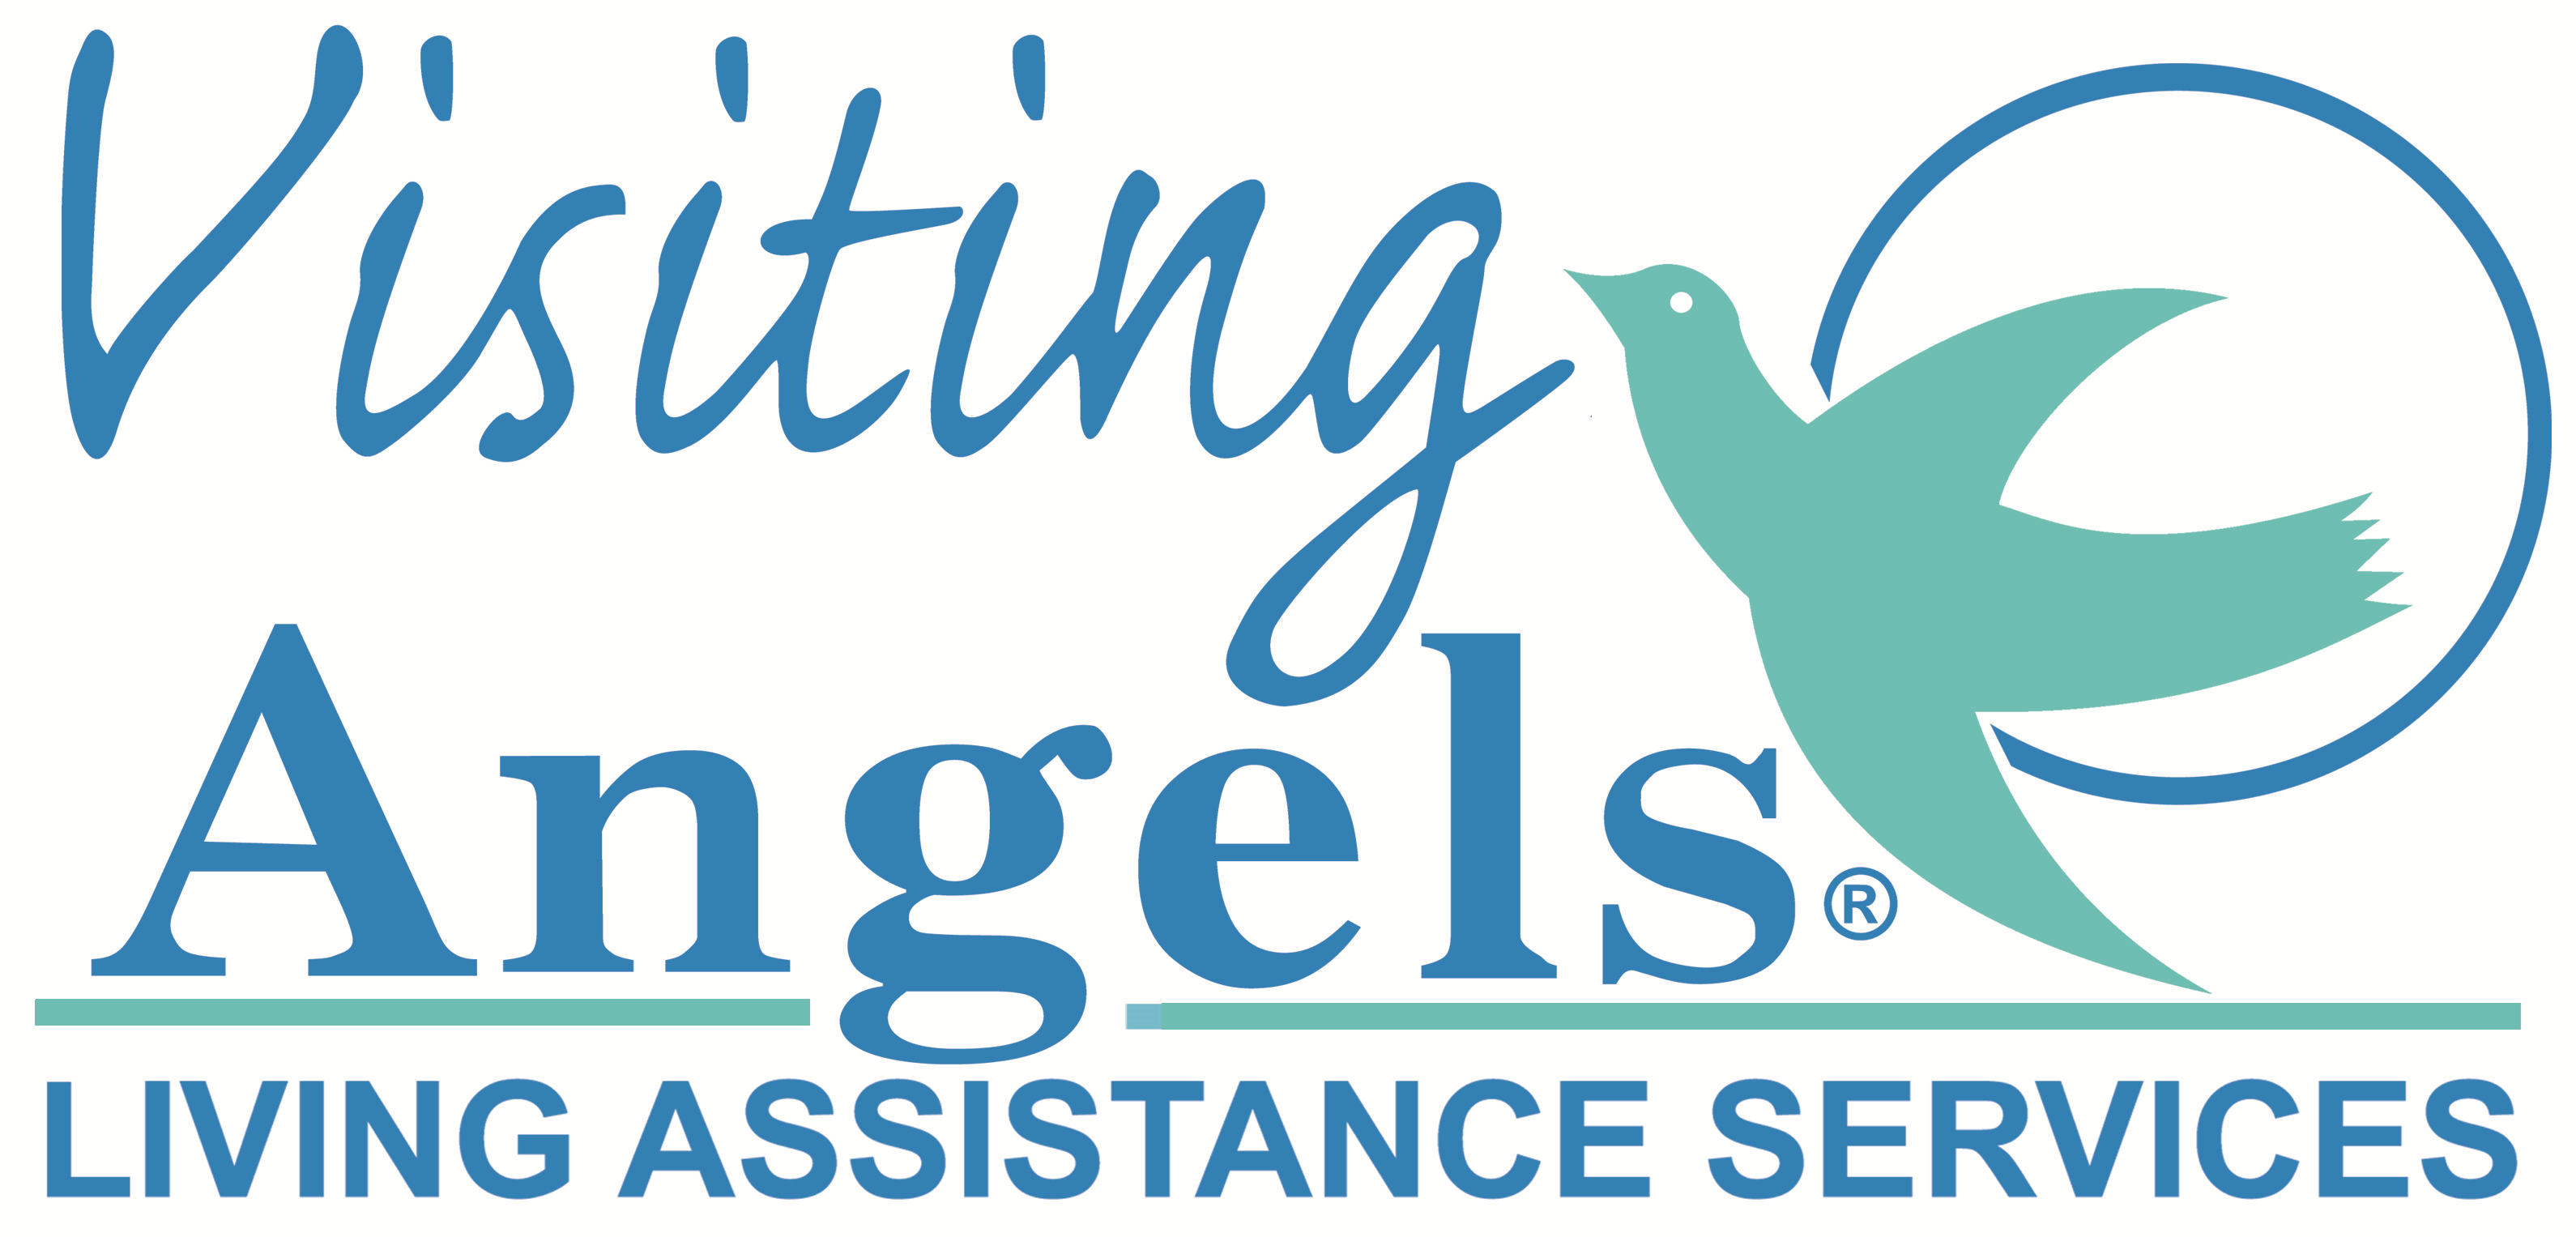 Visiting Angels-Gresham logo